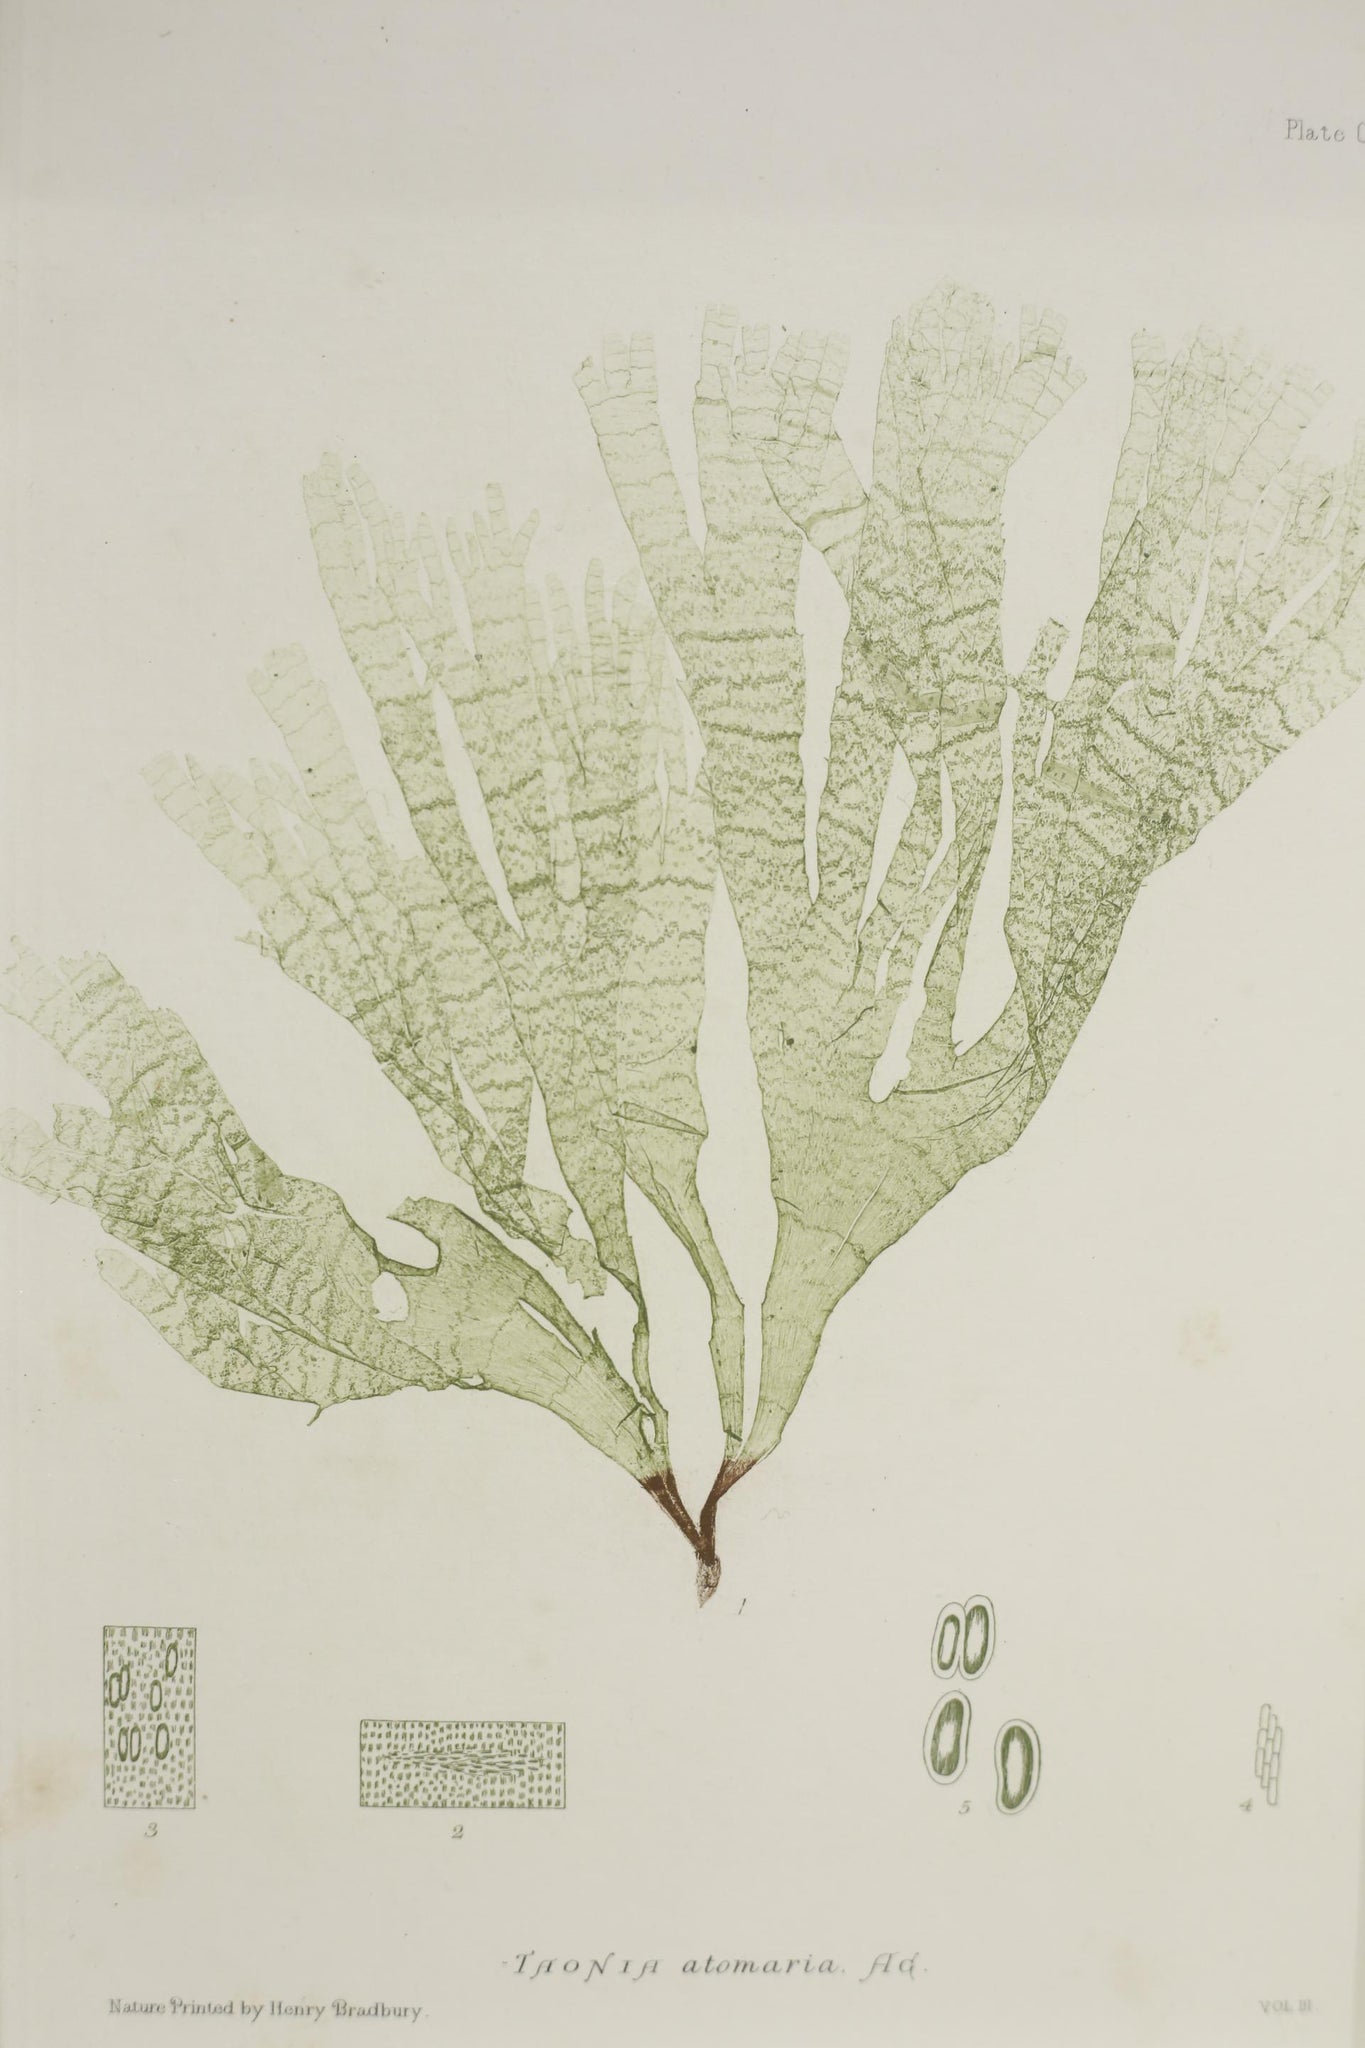 Henry Bradbury Seaweed print #15